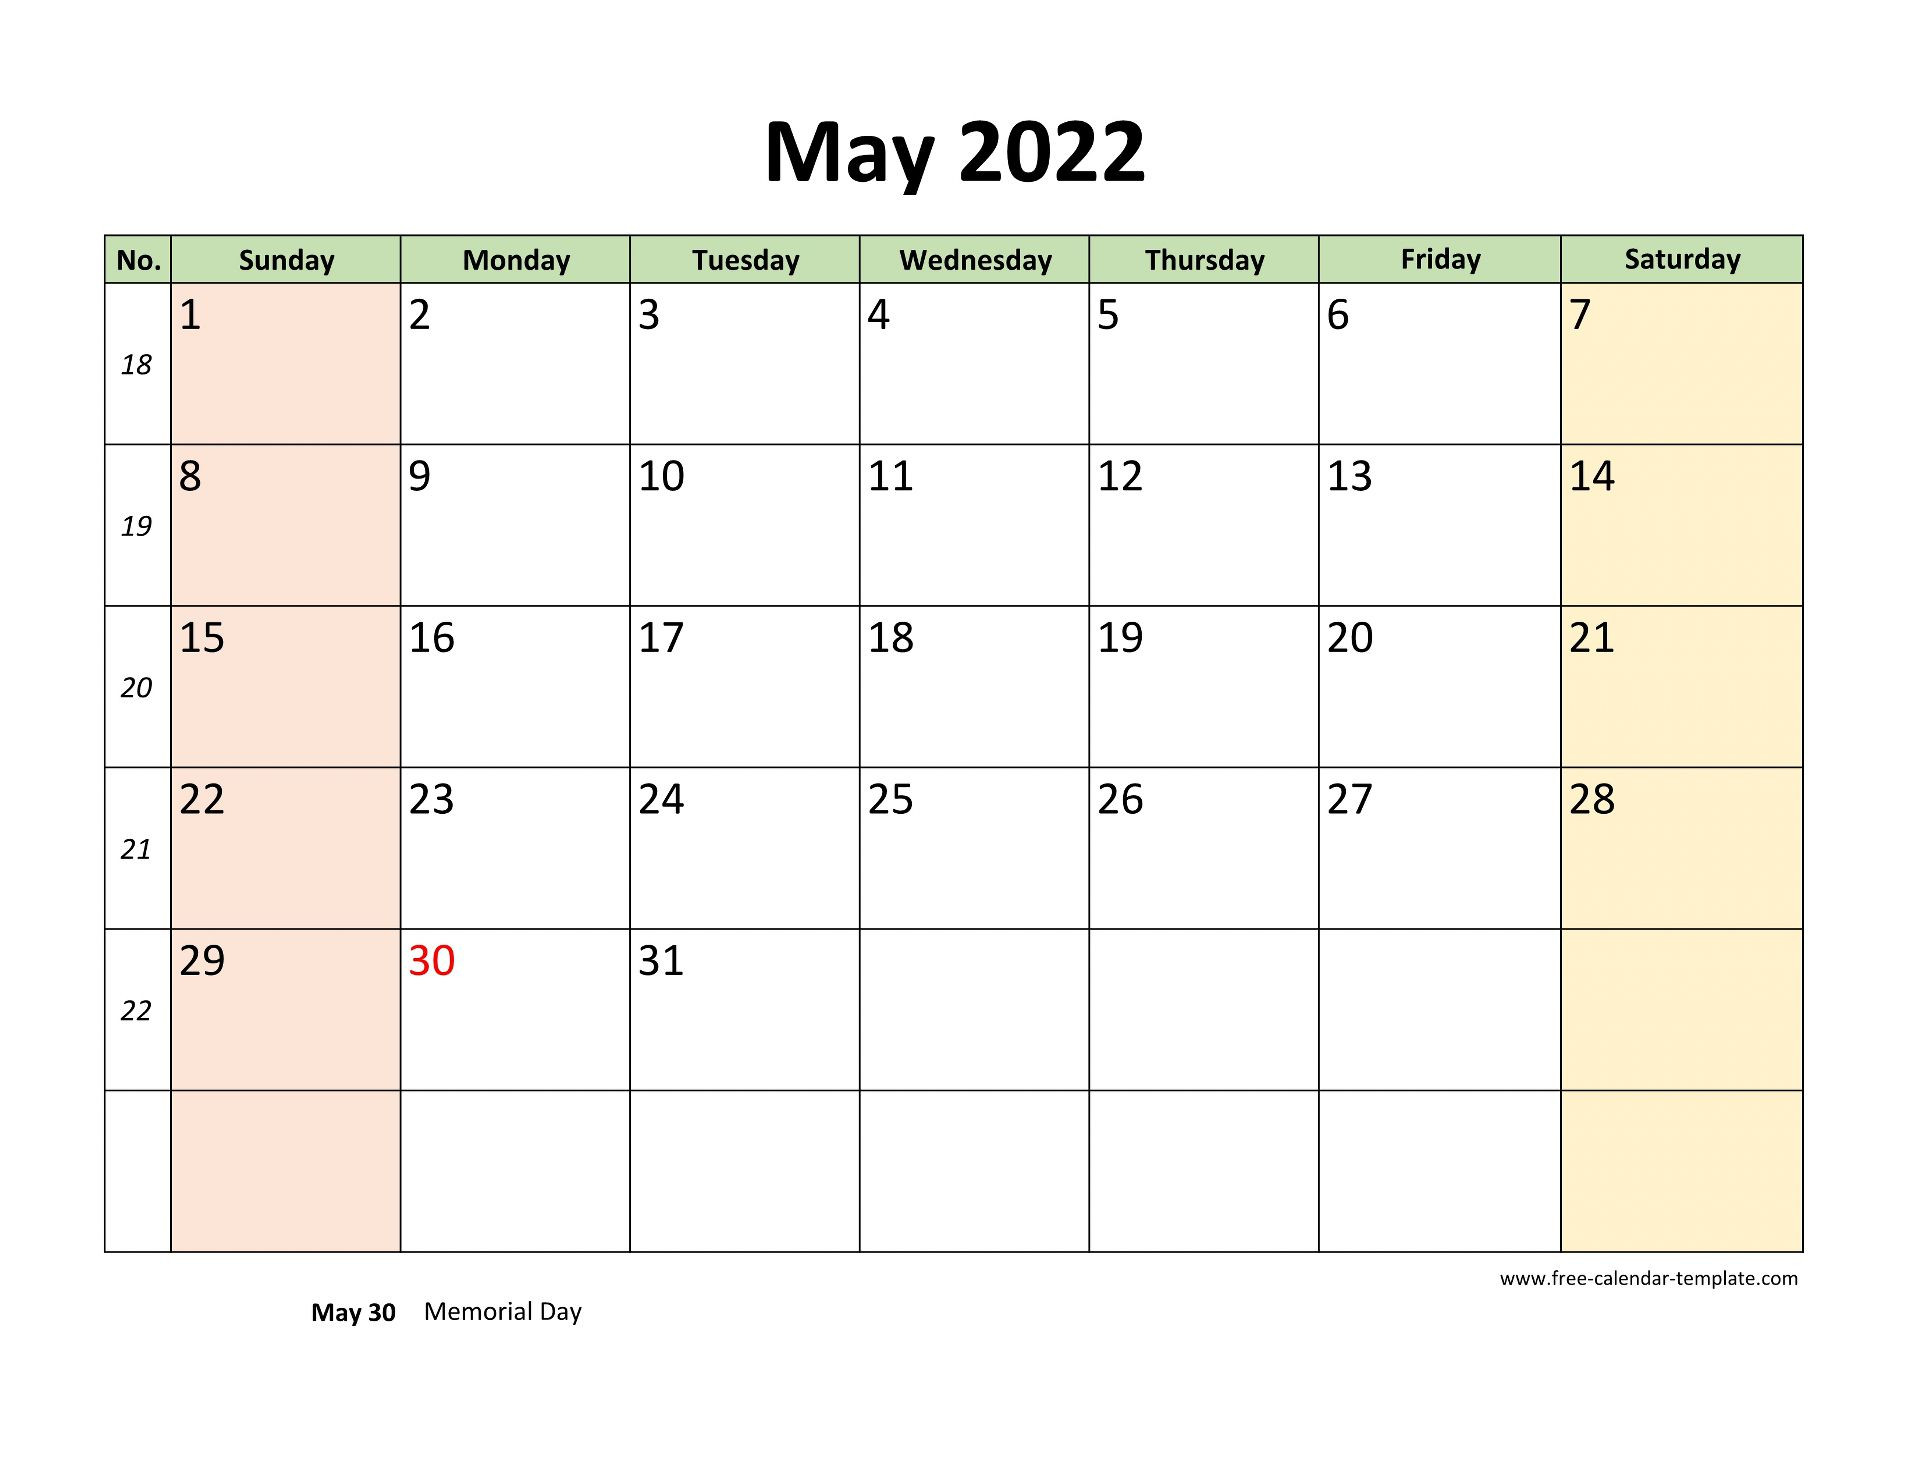 May 2022 Free Calendar Tempplate | Free-Calendar-Template  May 2022 Calendar Printable